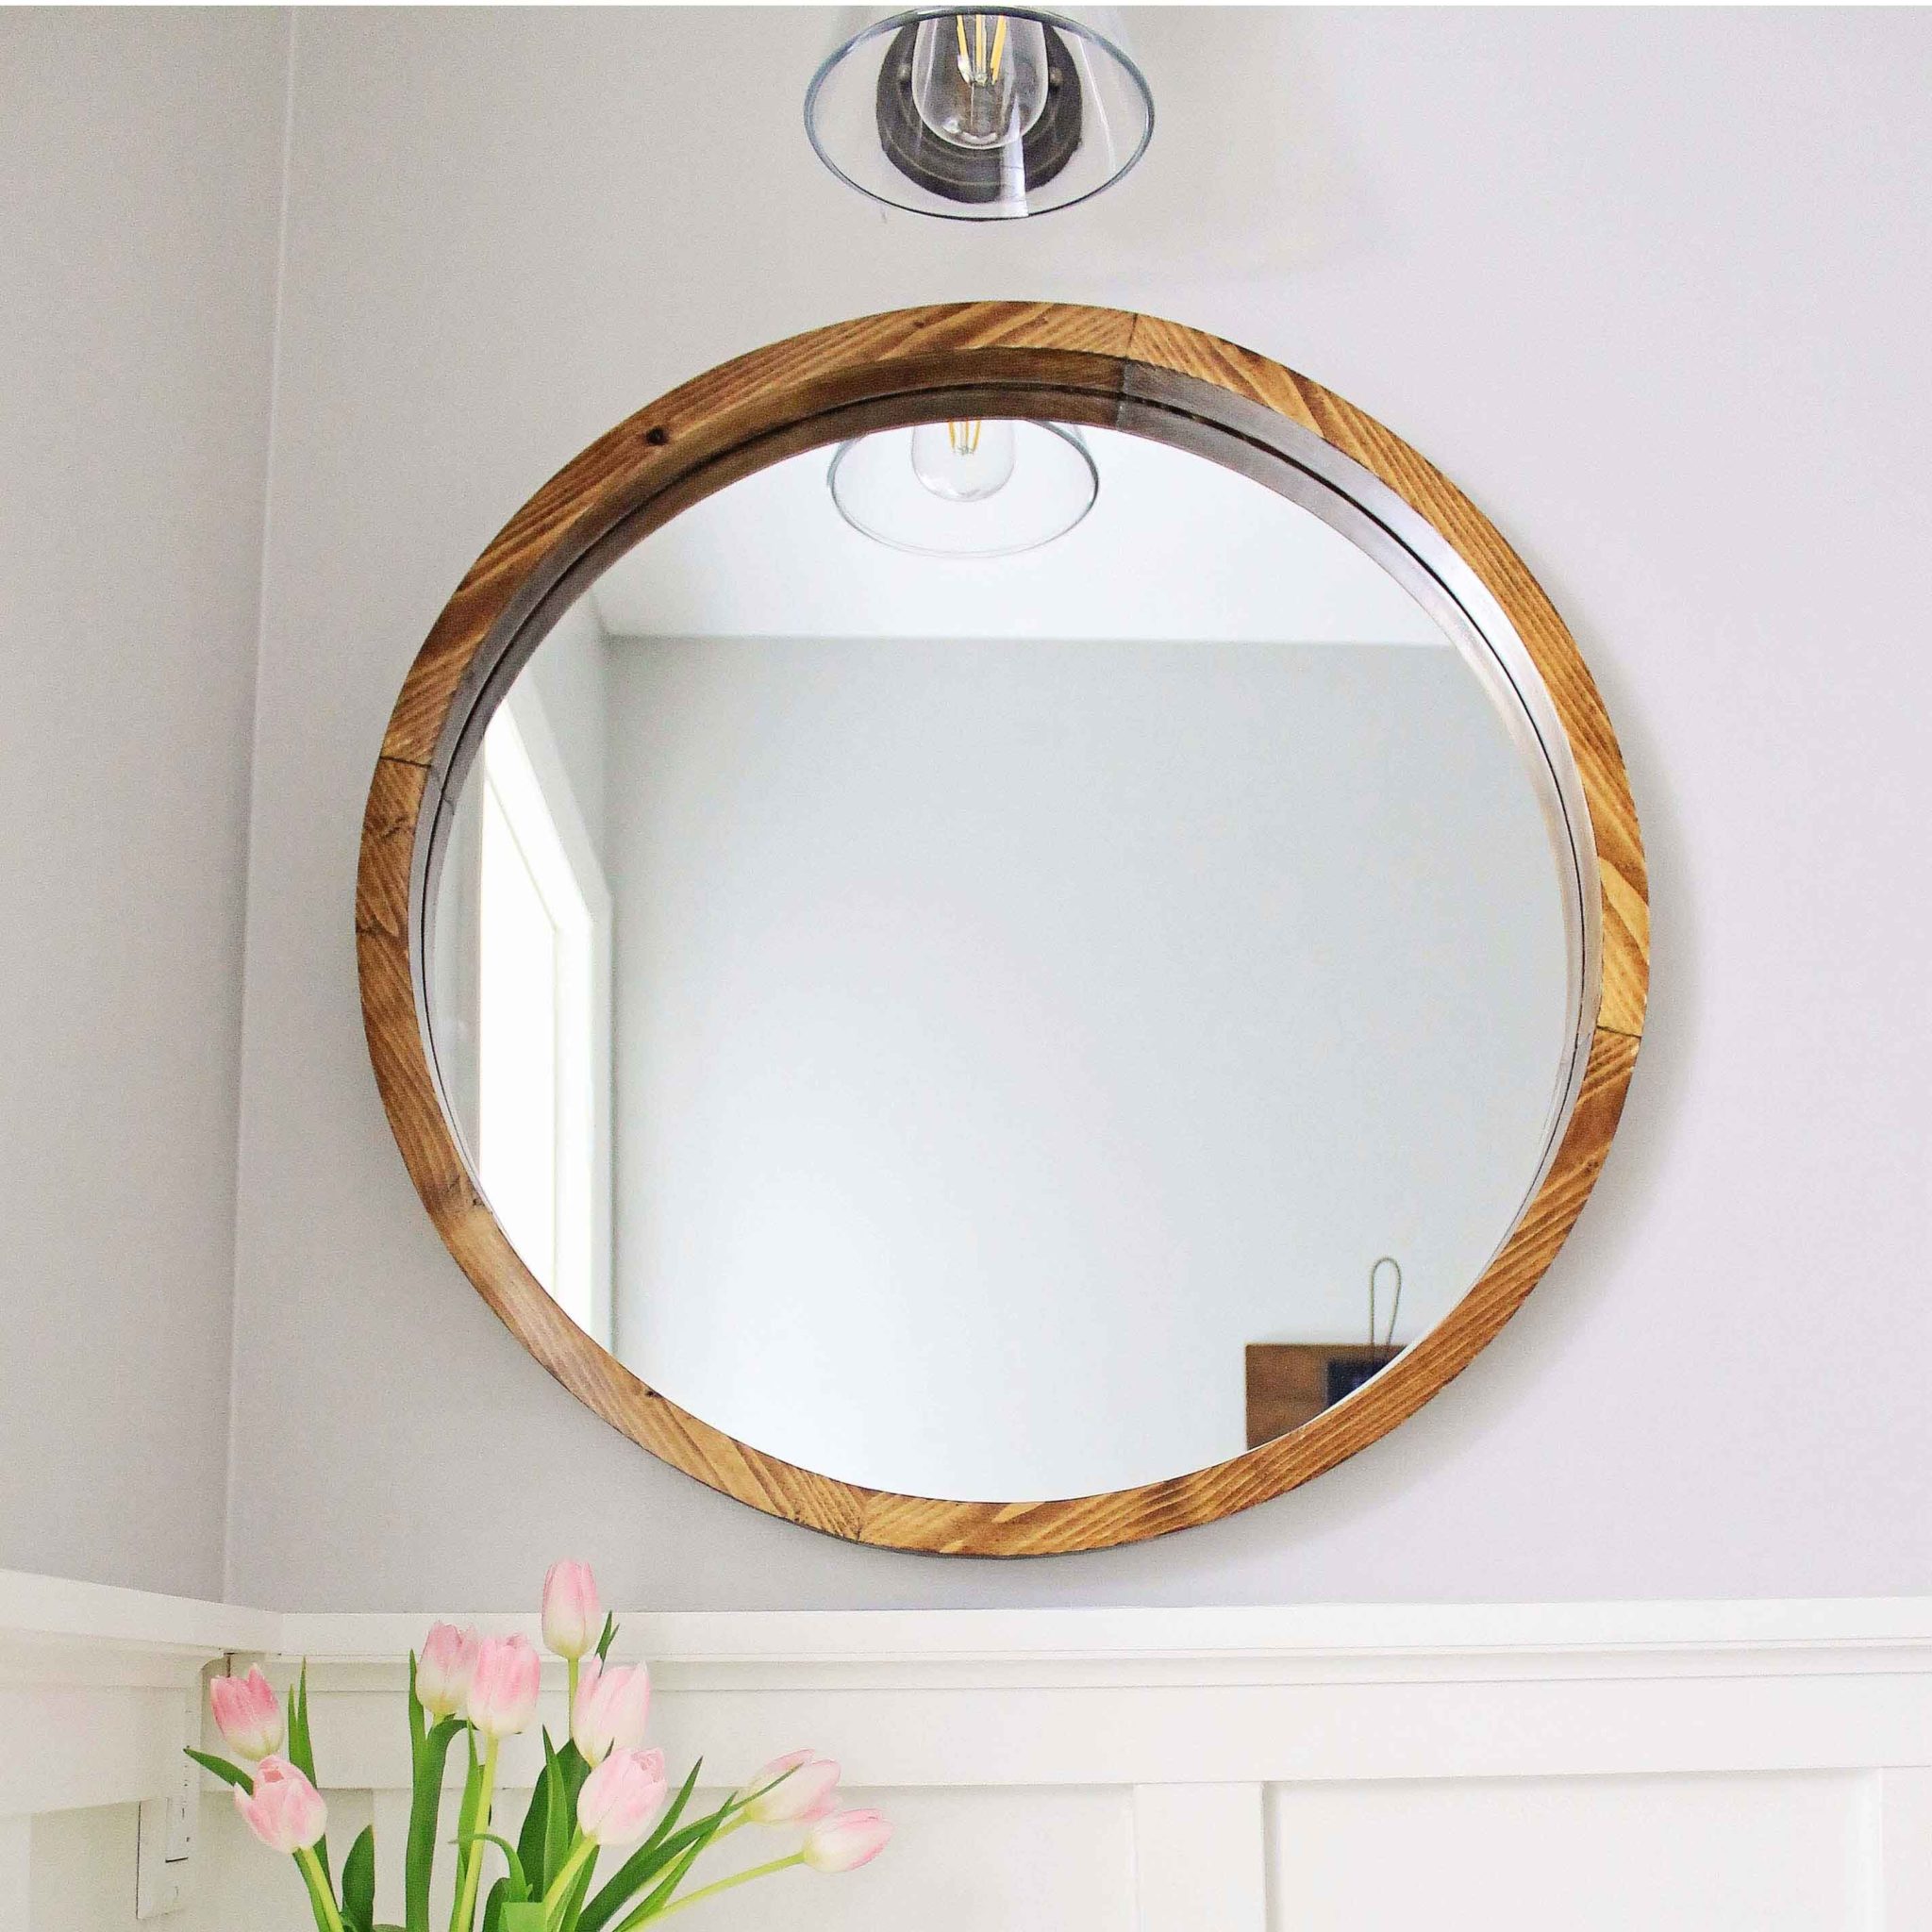 20 Diy Mirror Frame Ideas Kitchen Infinity